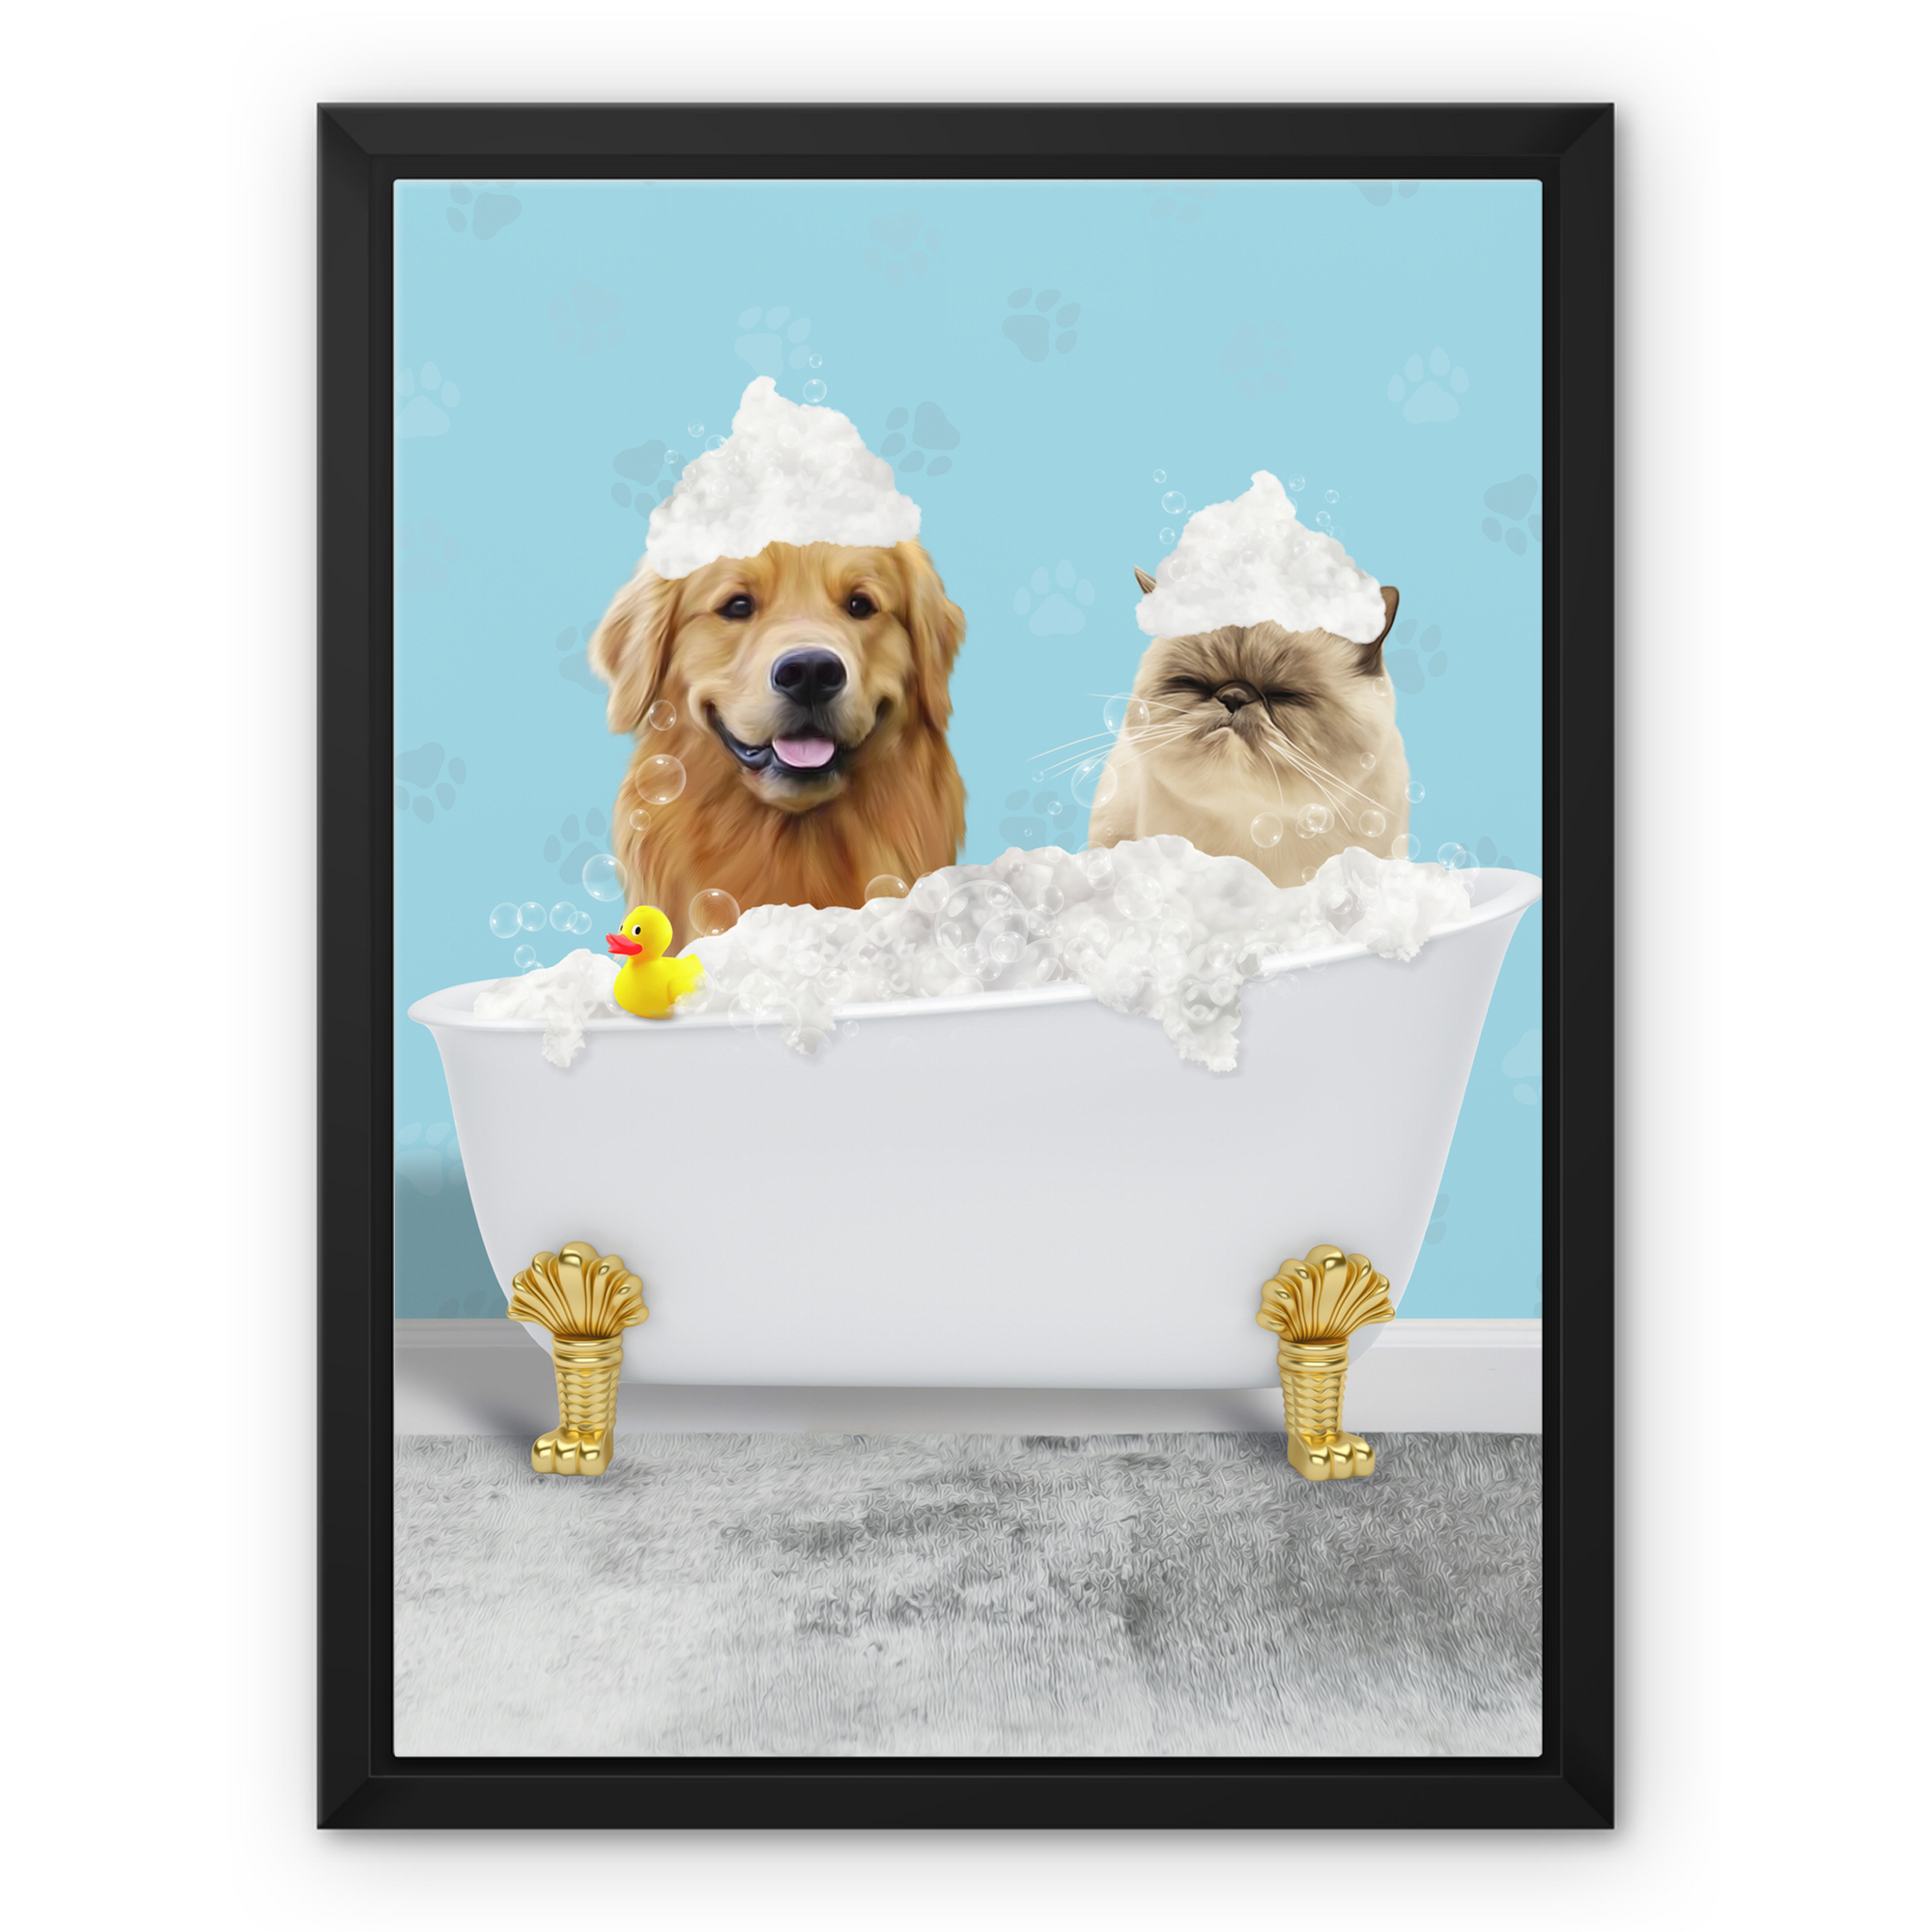 The Bath Tub: Custom 2 Pet Canvas - pawandglory, custom pet painting, dog canvas art, paintings of pets from photos, custom dog painting, pet portraits, funny dog paintings, small dog portrait